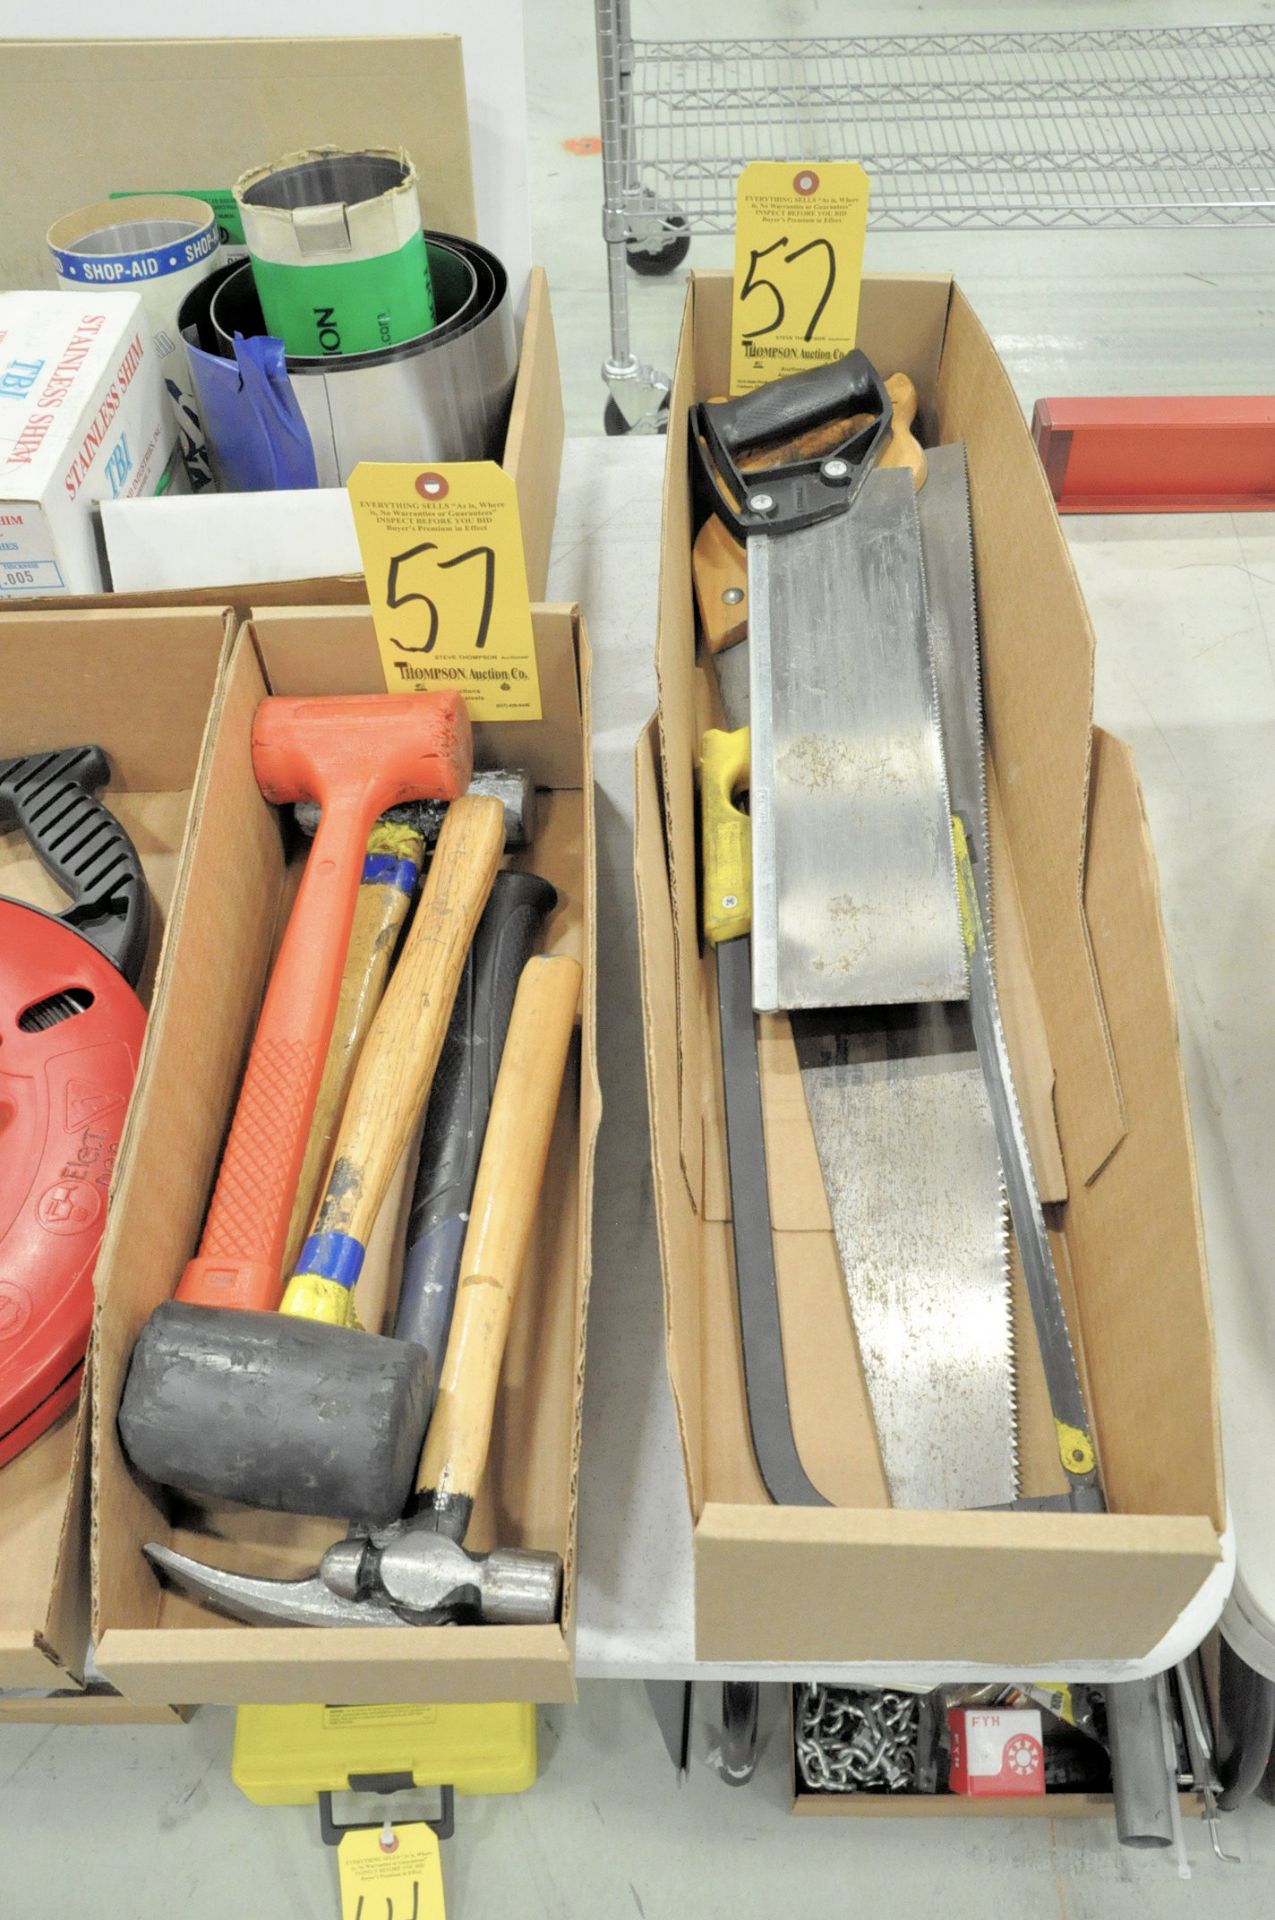 Lot-Hammers, Electrical Fish Tape, Shim Stock, Caulk Gun, Grease Guns, and Shims in (7) Boxes - Image 2 of 4